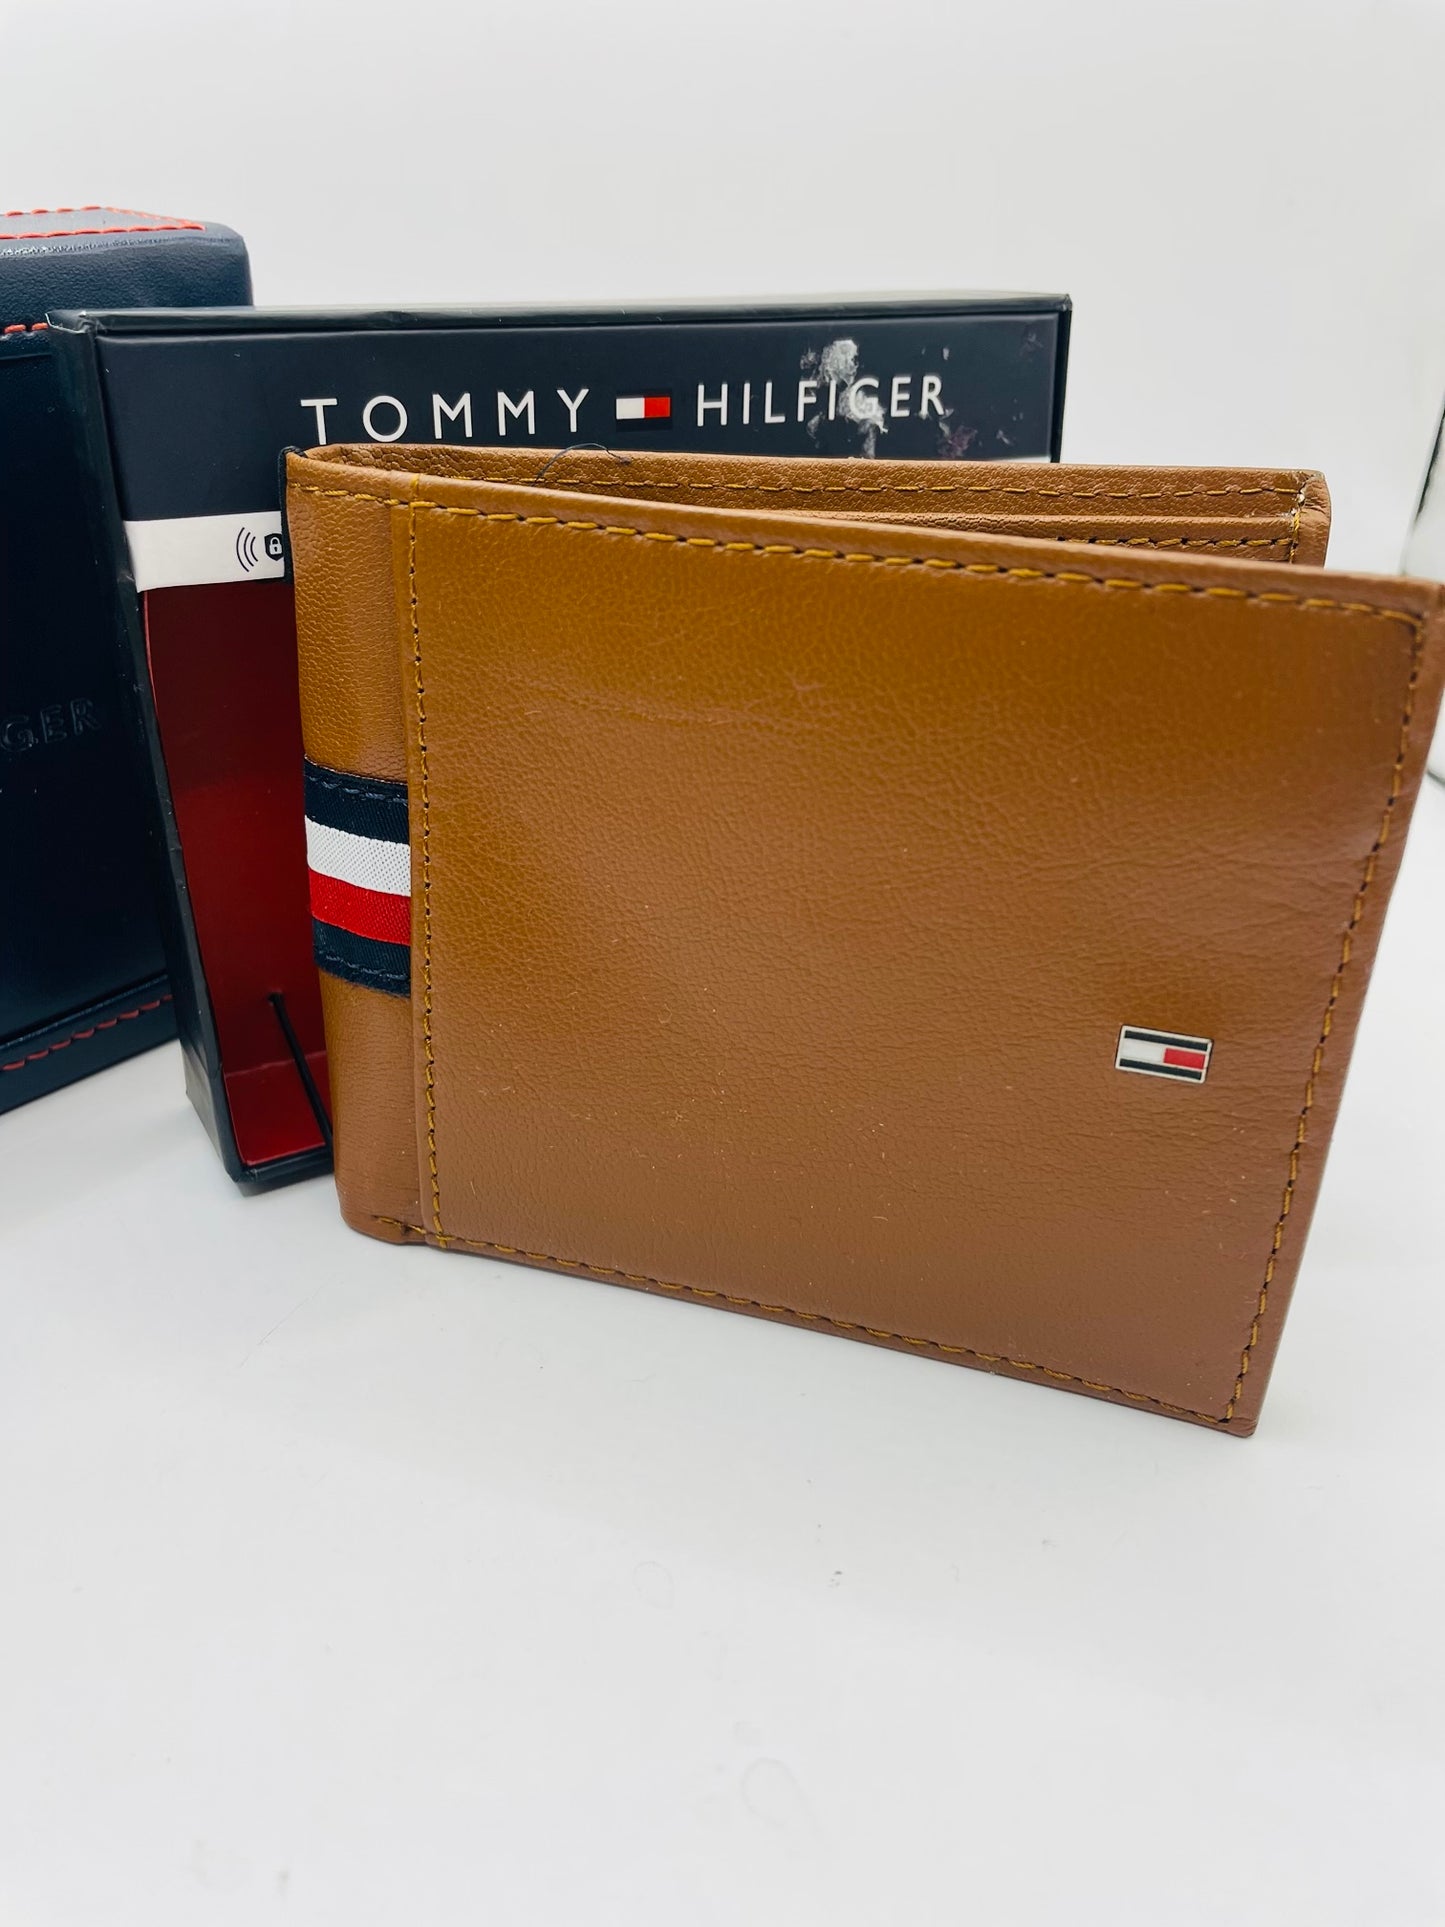 Tommy Hilfiger wallet